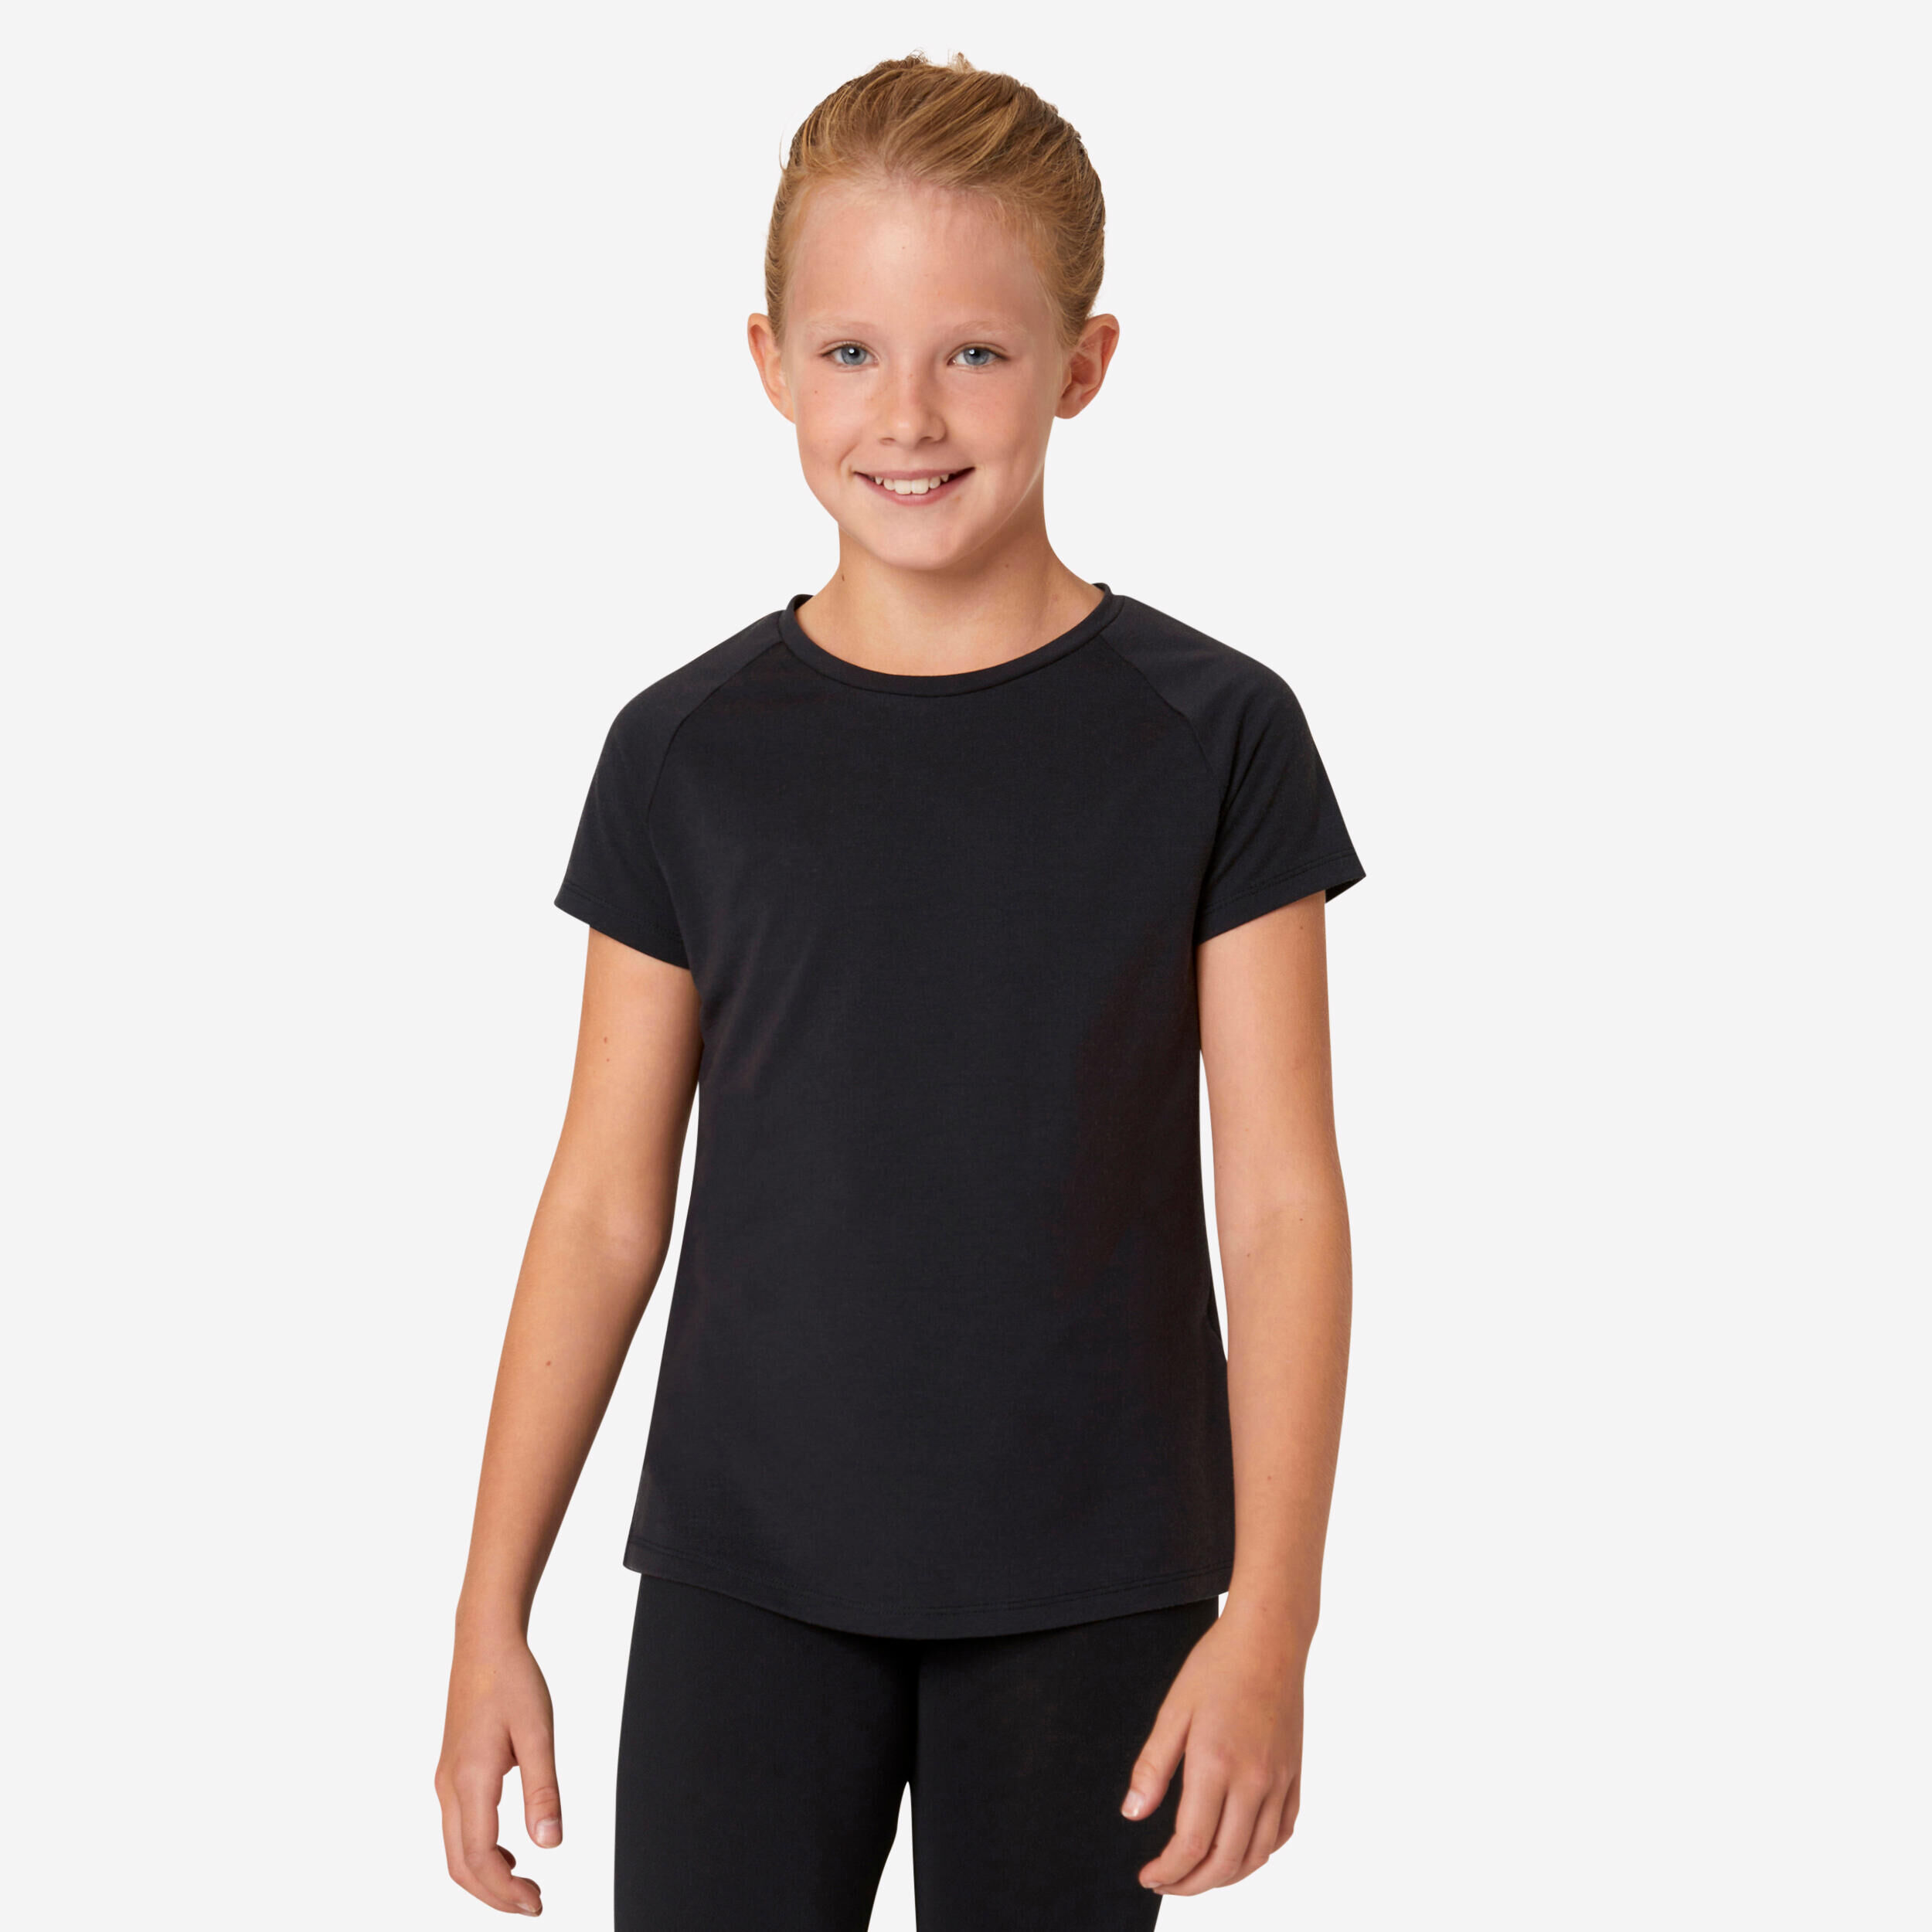 DECATHLON Girls' Breathable T-Shirt S500 - Black